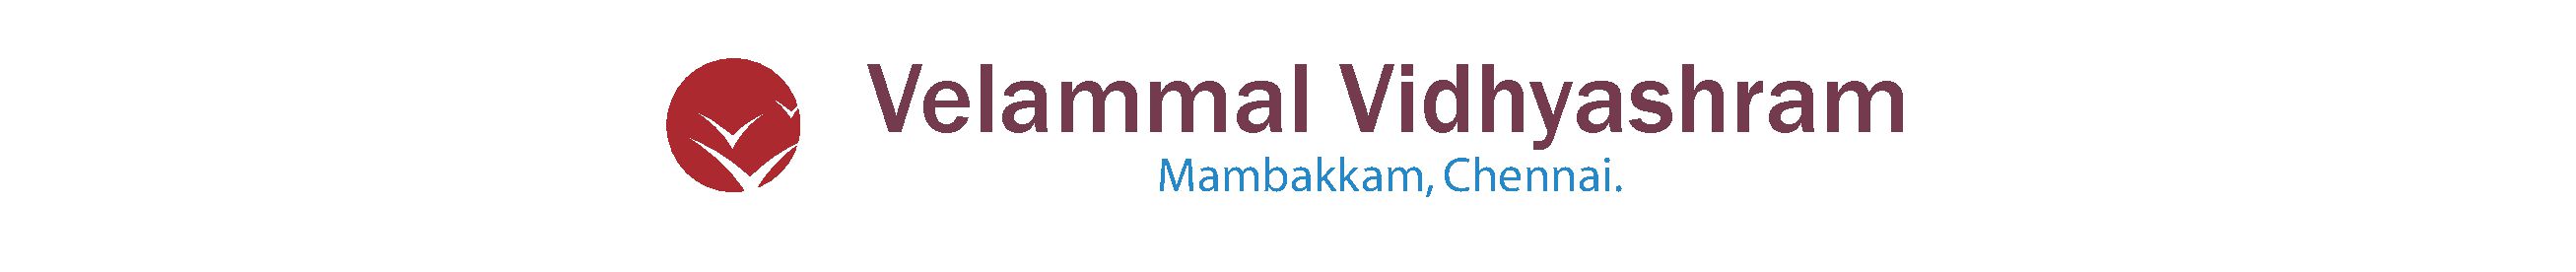 Velammal Vidhyashram